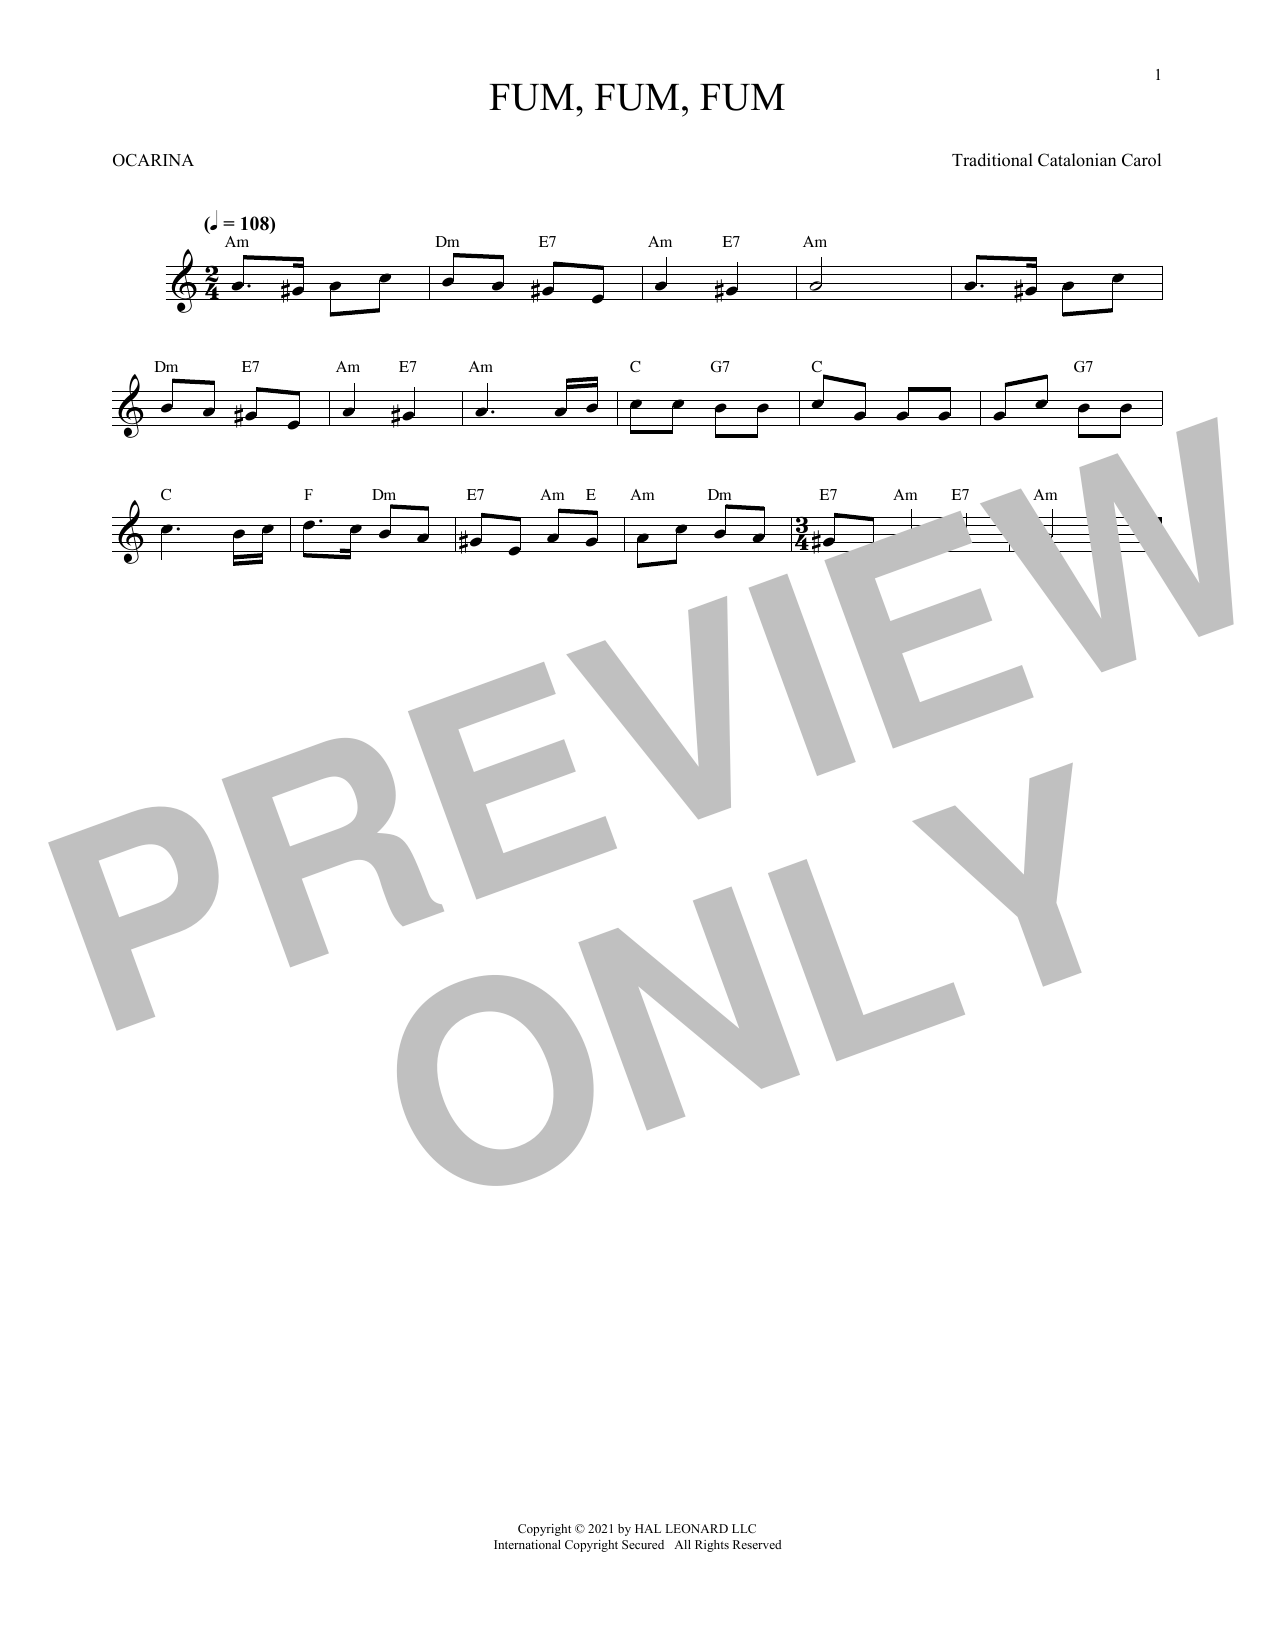 Traditional Catalonian Carol Fum, Fum, Fum (arr. Cris Gale) Sheet Music Notes & Chords for Ocarina - Download or Print PDF